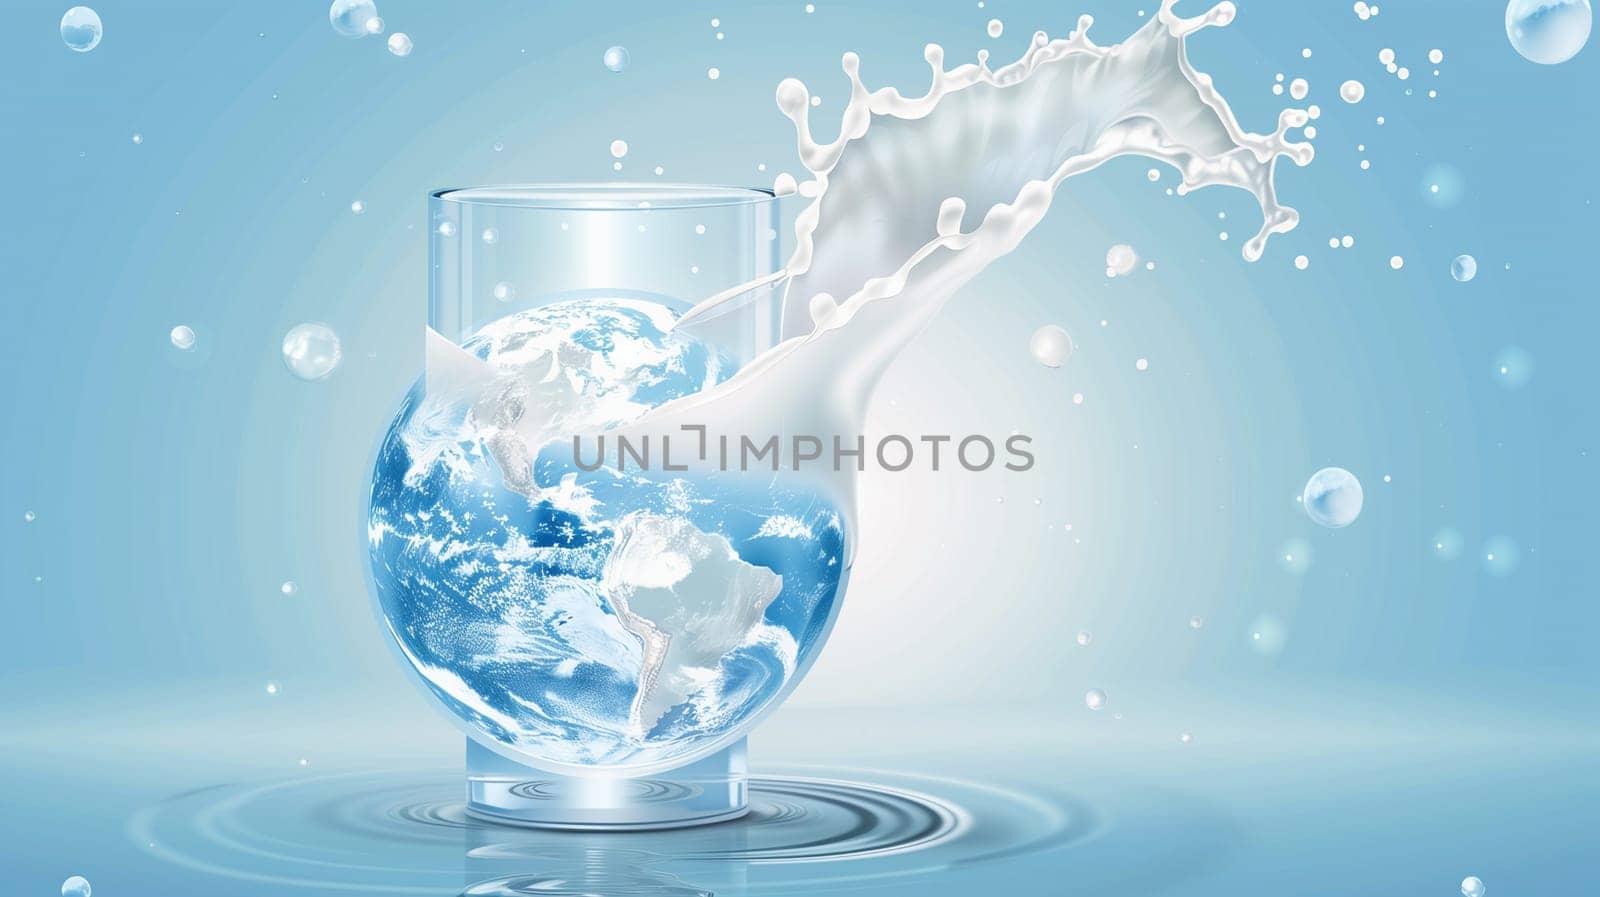 A splash of milk forms a swirling globe shape in a clear glass, symbolizing international appreciation on Happy Milk Day.